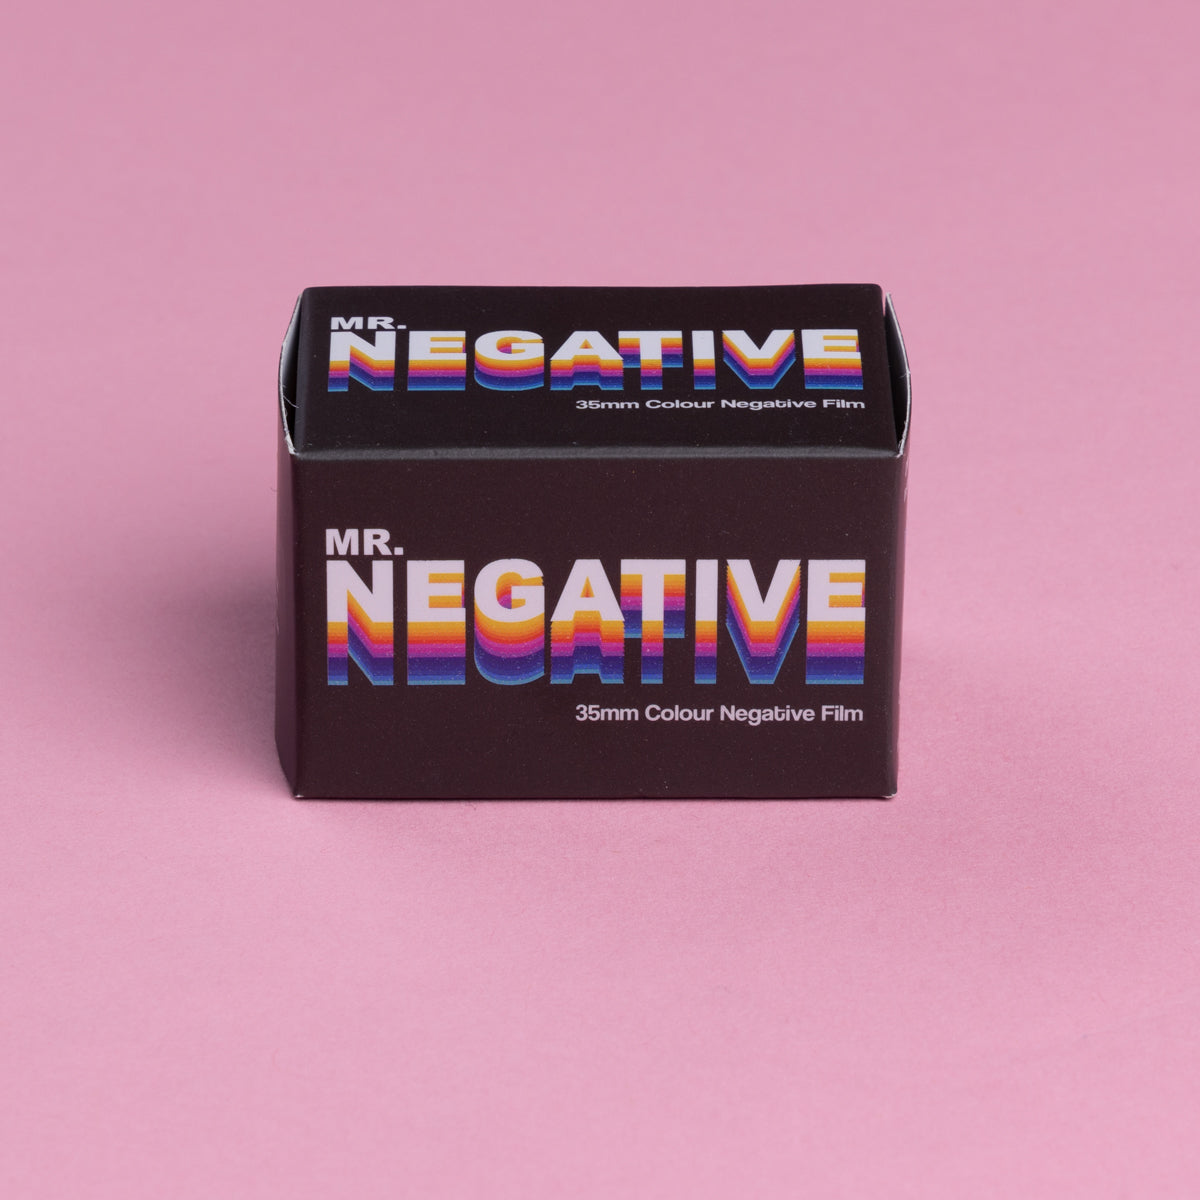 Free Gift 35mm Film Roll - Mr. Negative 36 exp